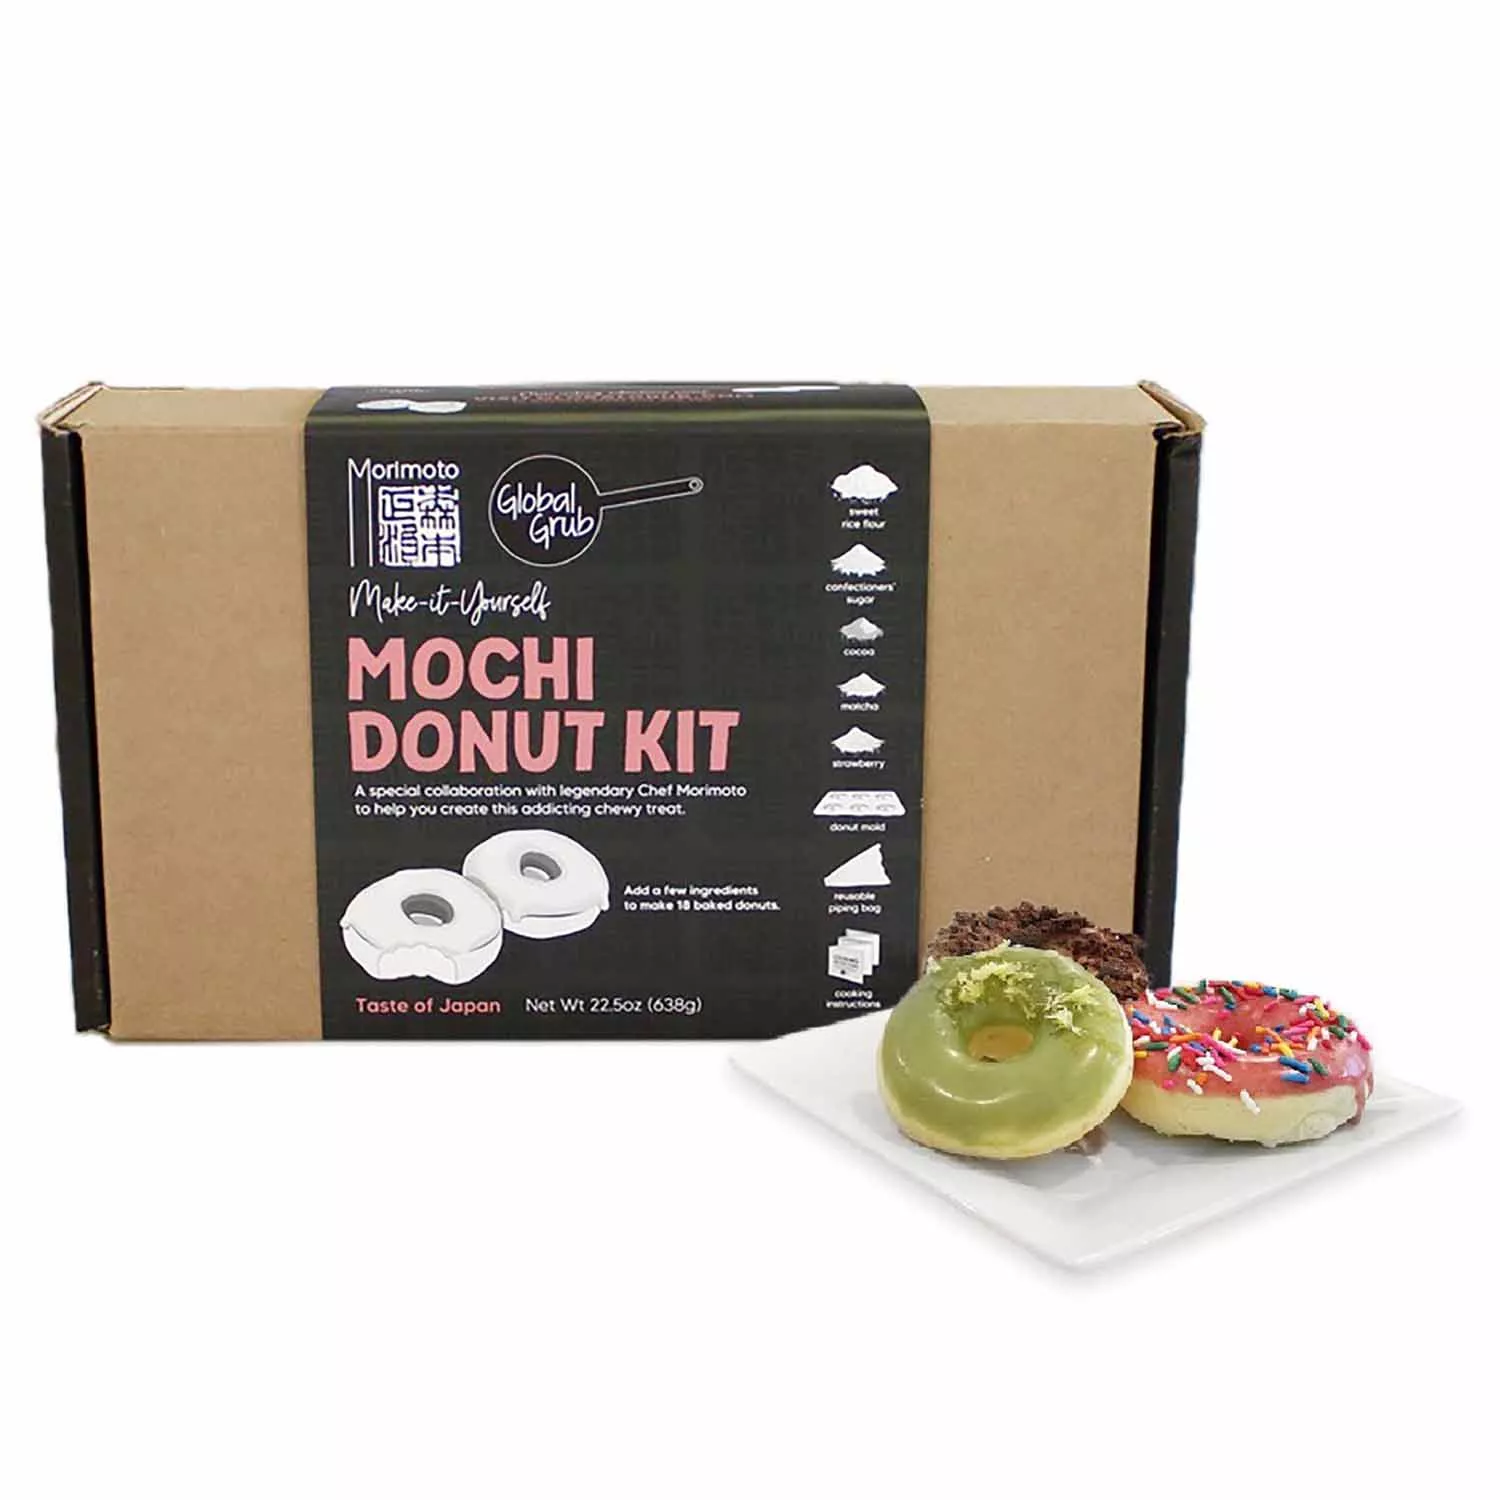 Kids' Mochi Doughnut Baking Kit, No artificial dyes